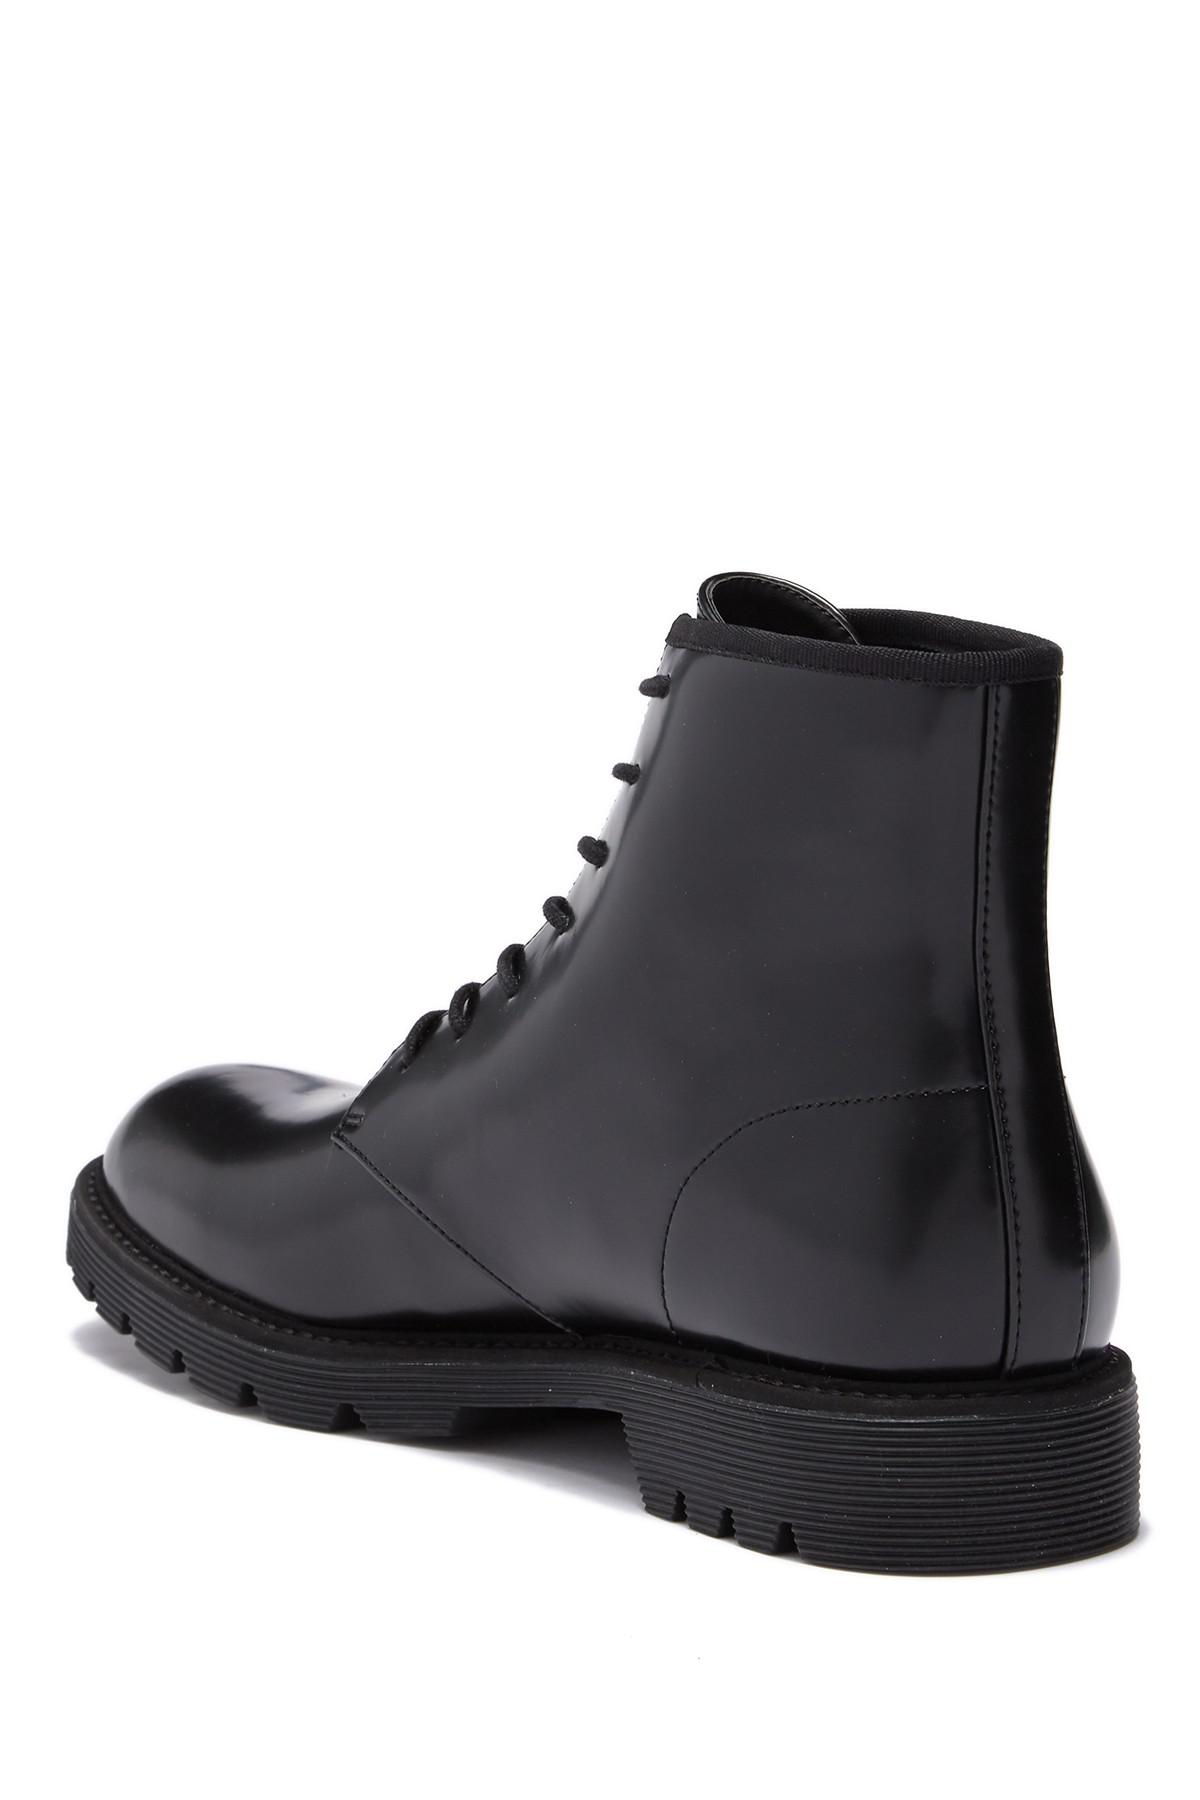 Calvin Klein Fenton Box Leather Boot in 